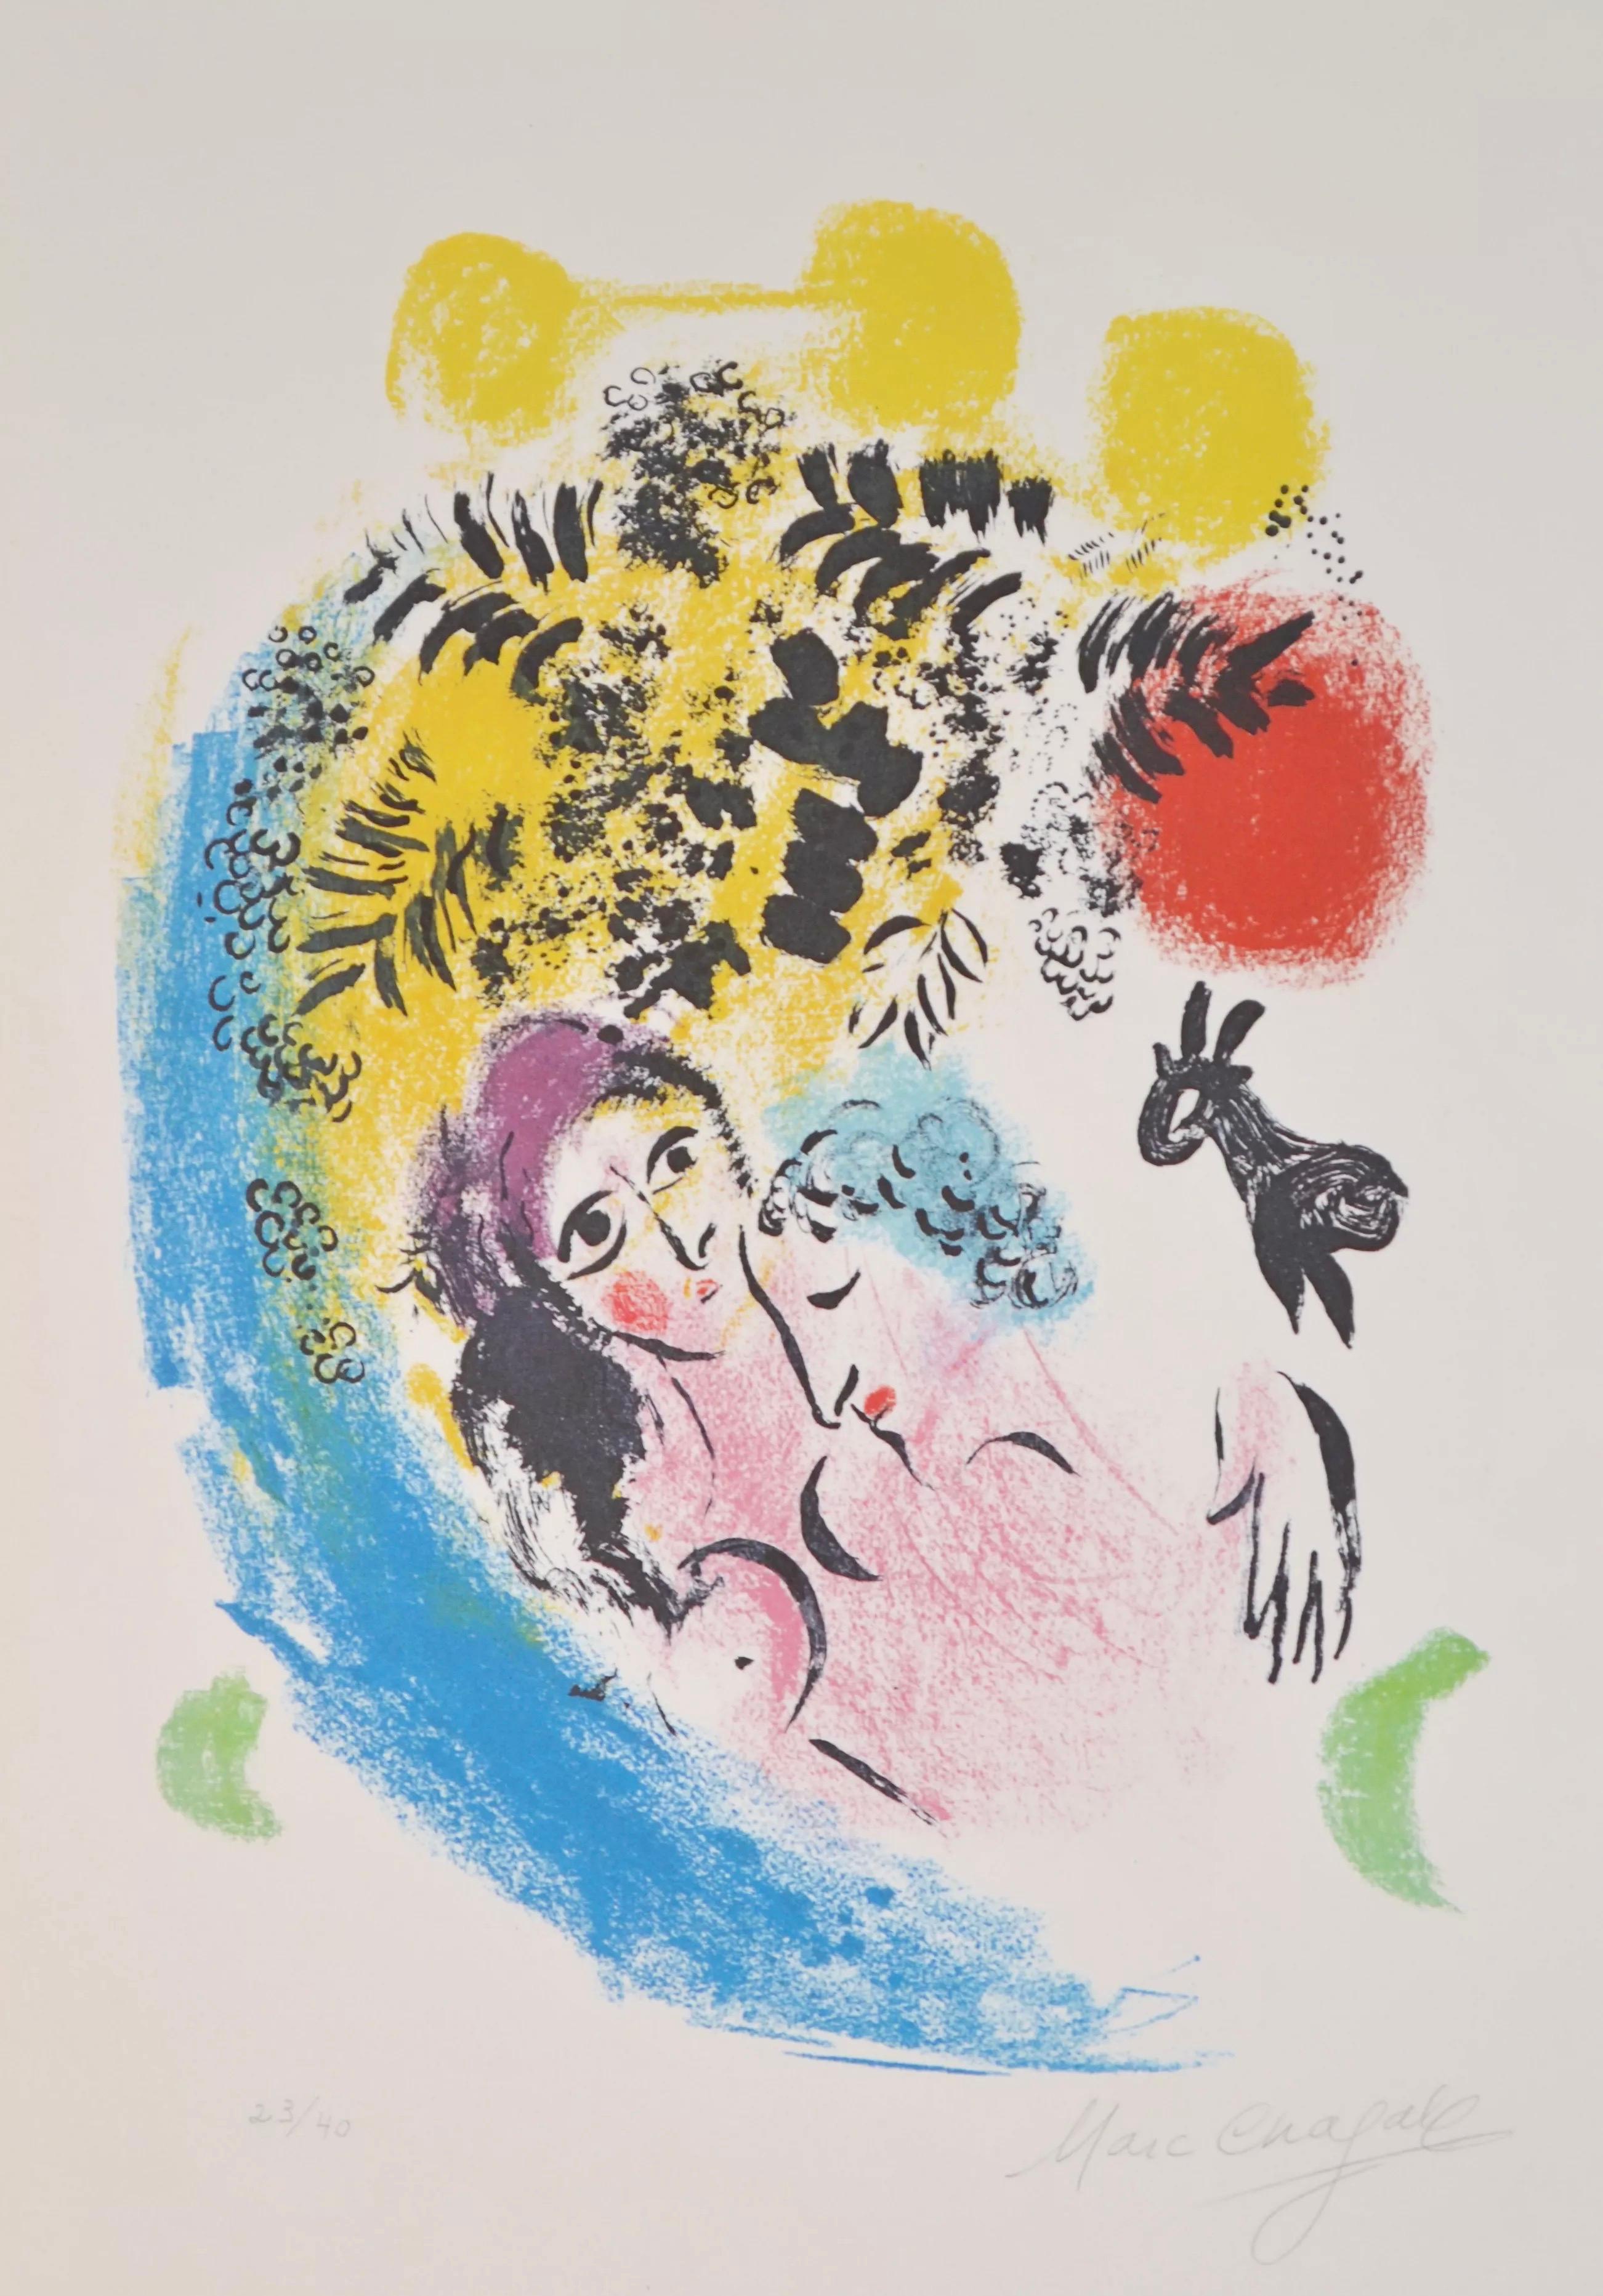 Les Amoureux A Soleil Rouge - M285 - Print by Marc Chagall